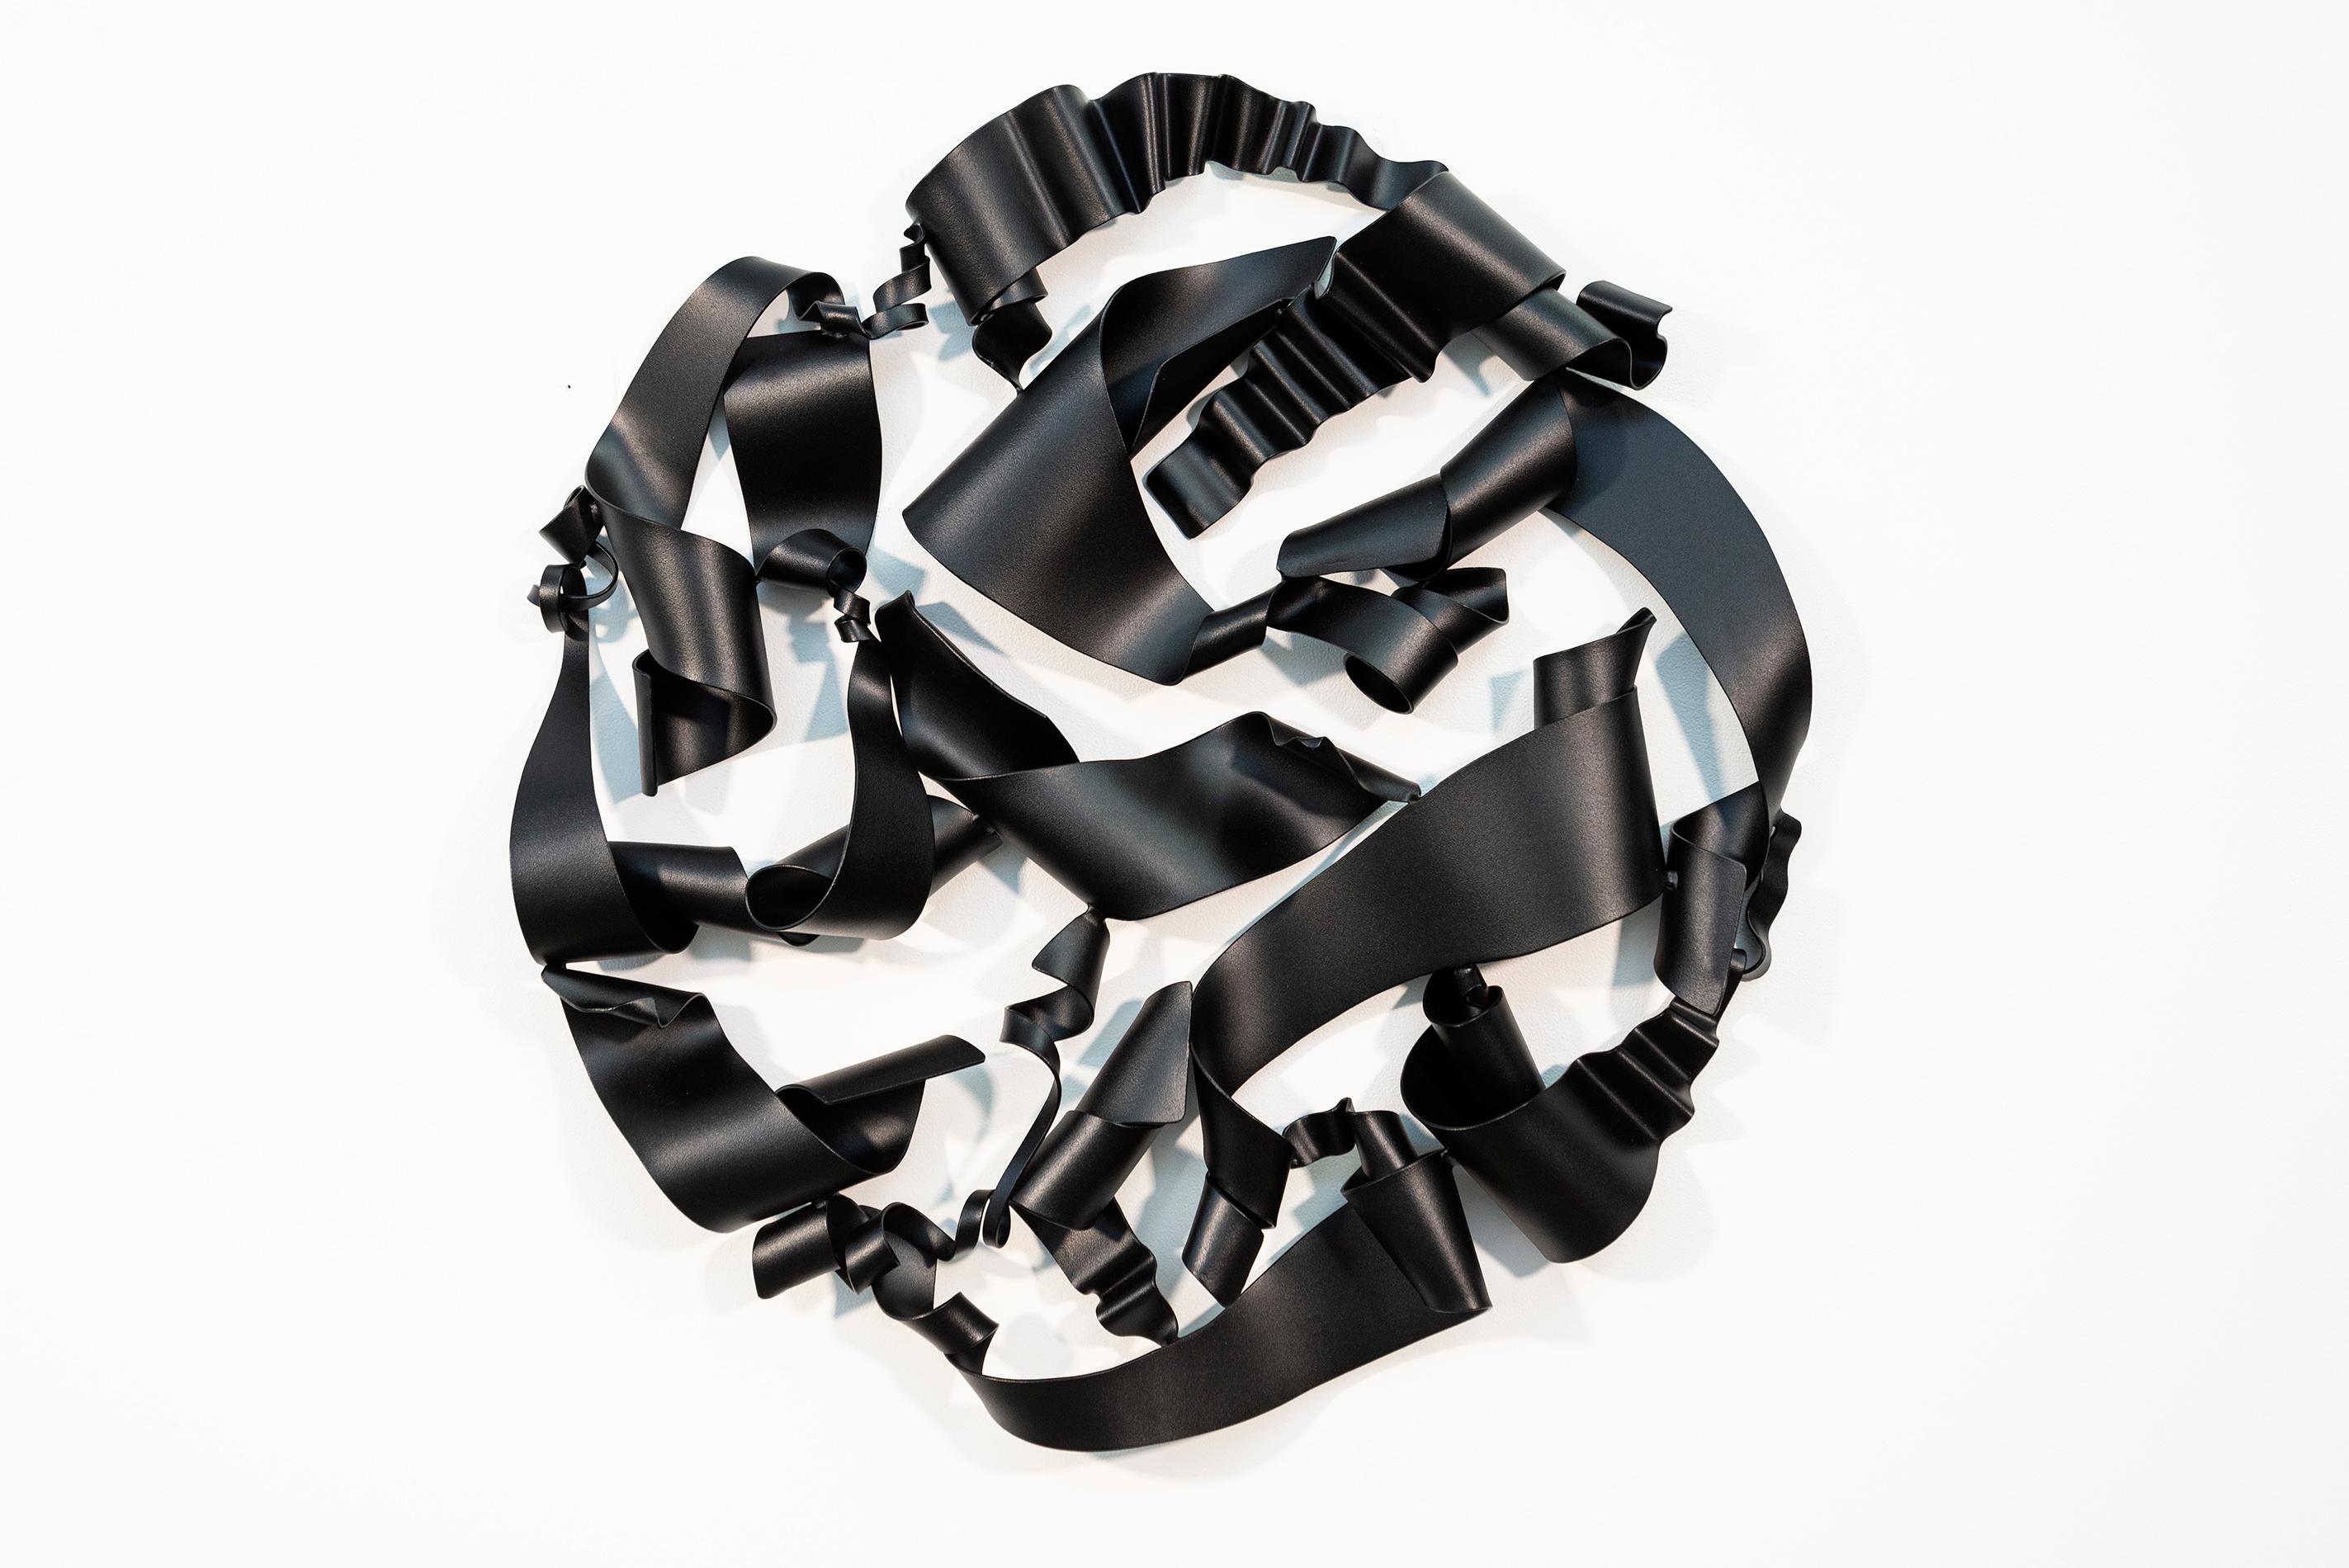 Sword of No Sword 6 - black, abstract, powder coated steel, wall sculpture - Sculpture by Stefan Duerst